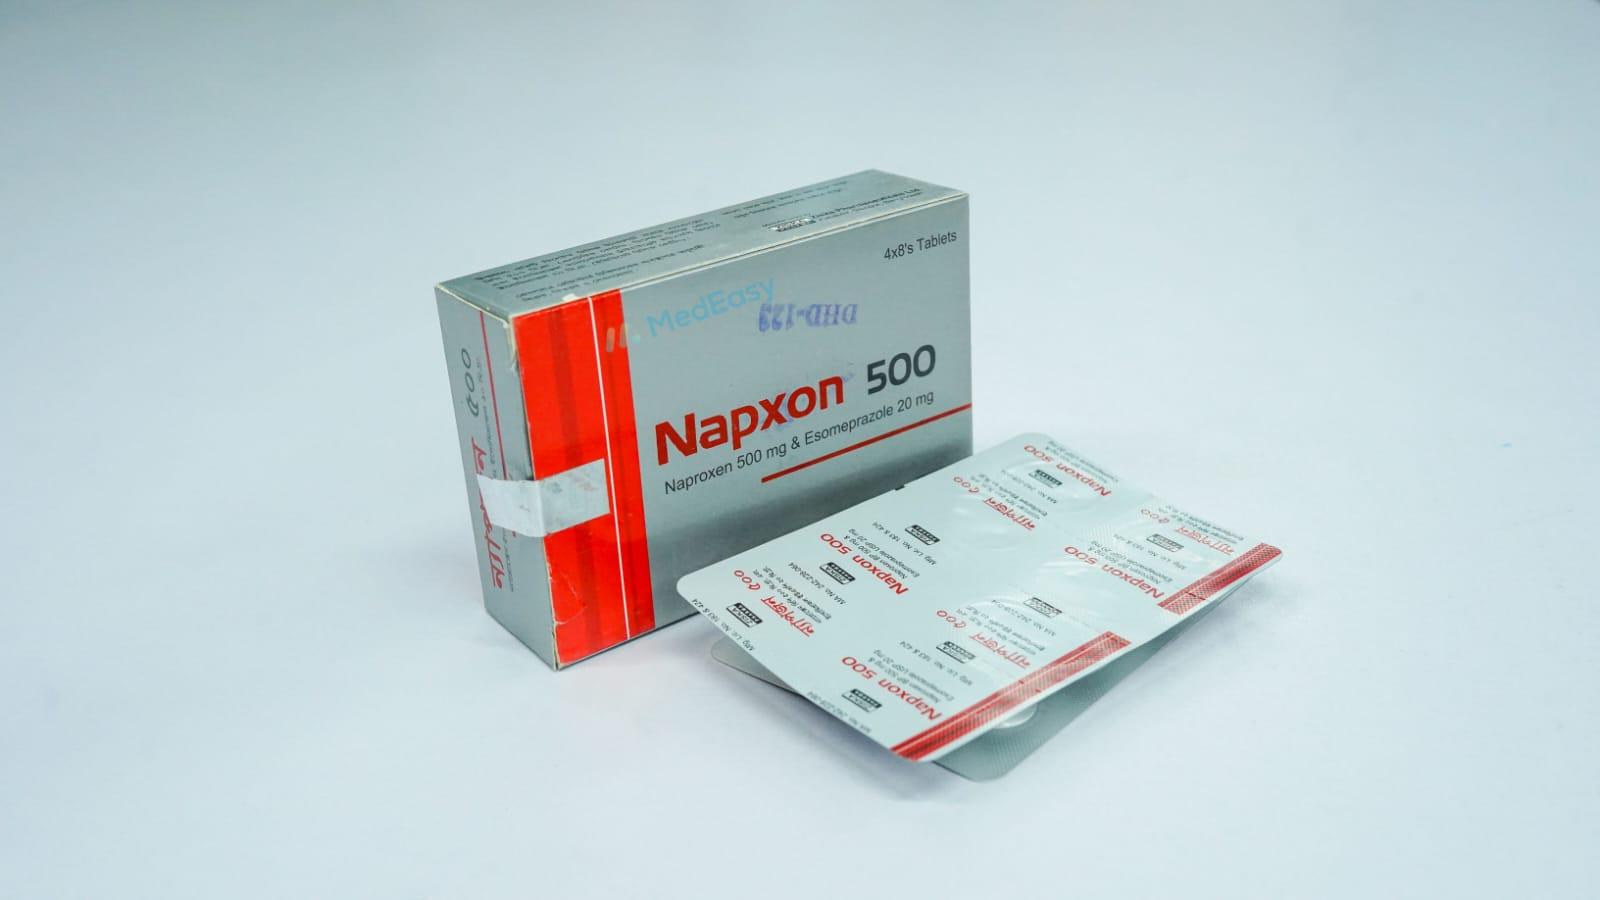 Napxon